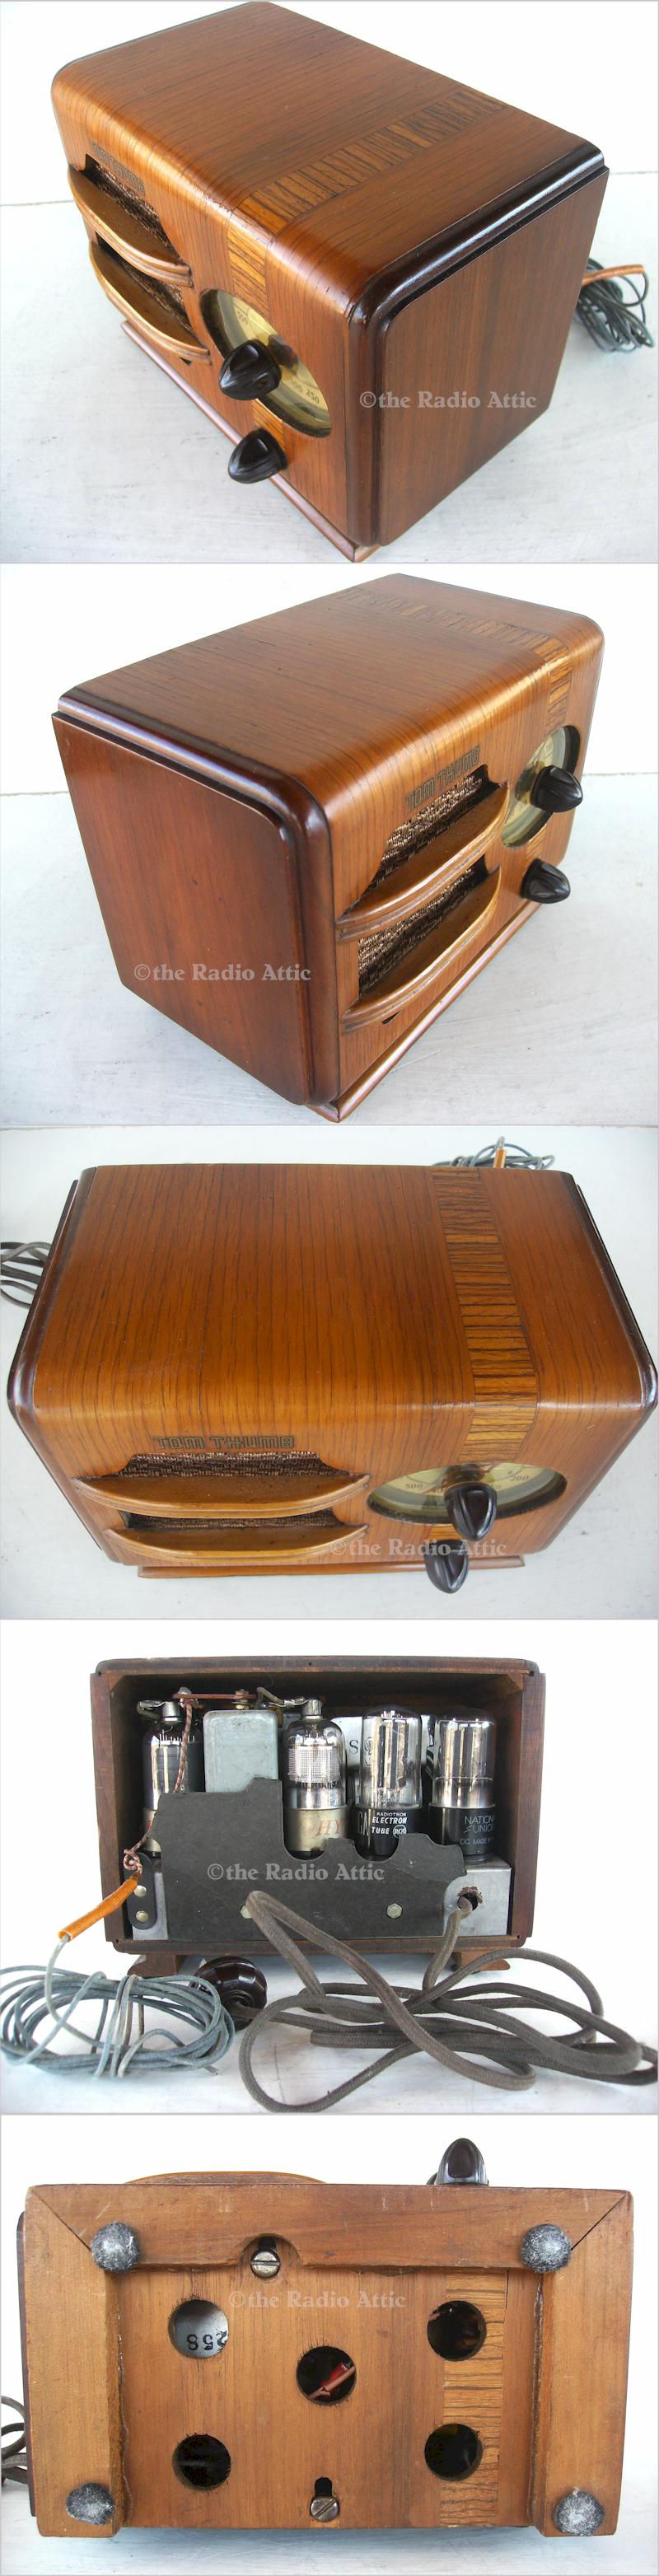 Tom Thumb 950 (by Automatic Radio, 1938)